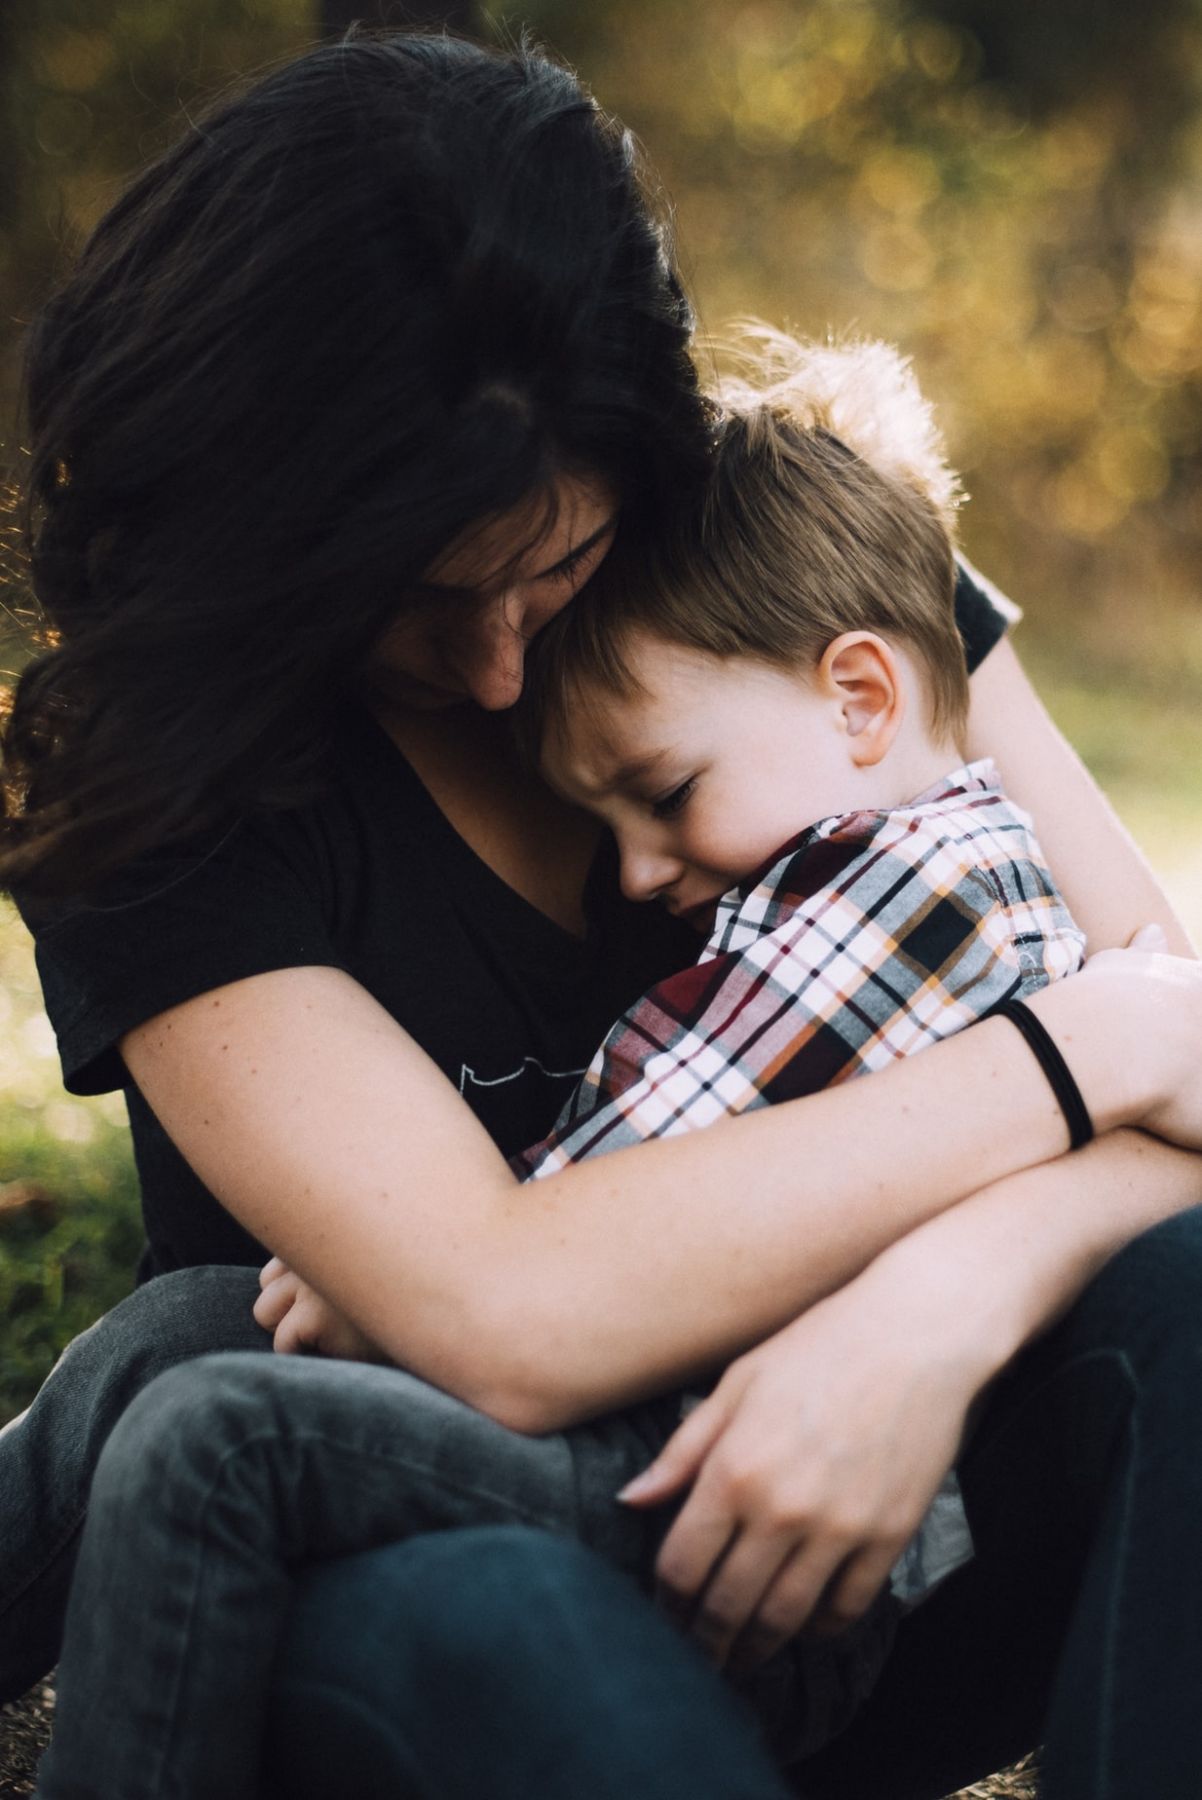 dark haired woman hugs small boy in plaid shirt